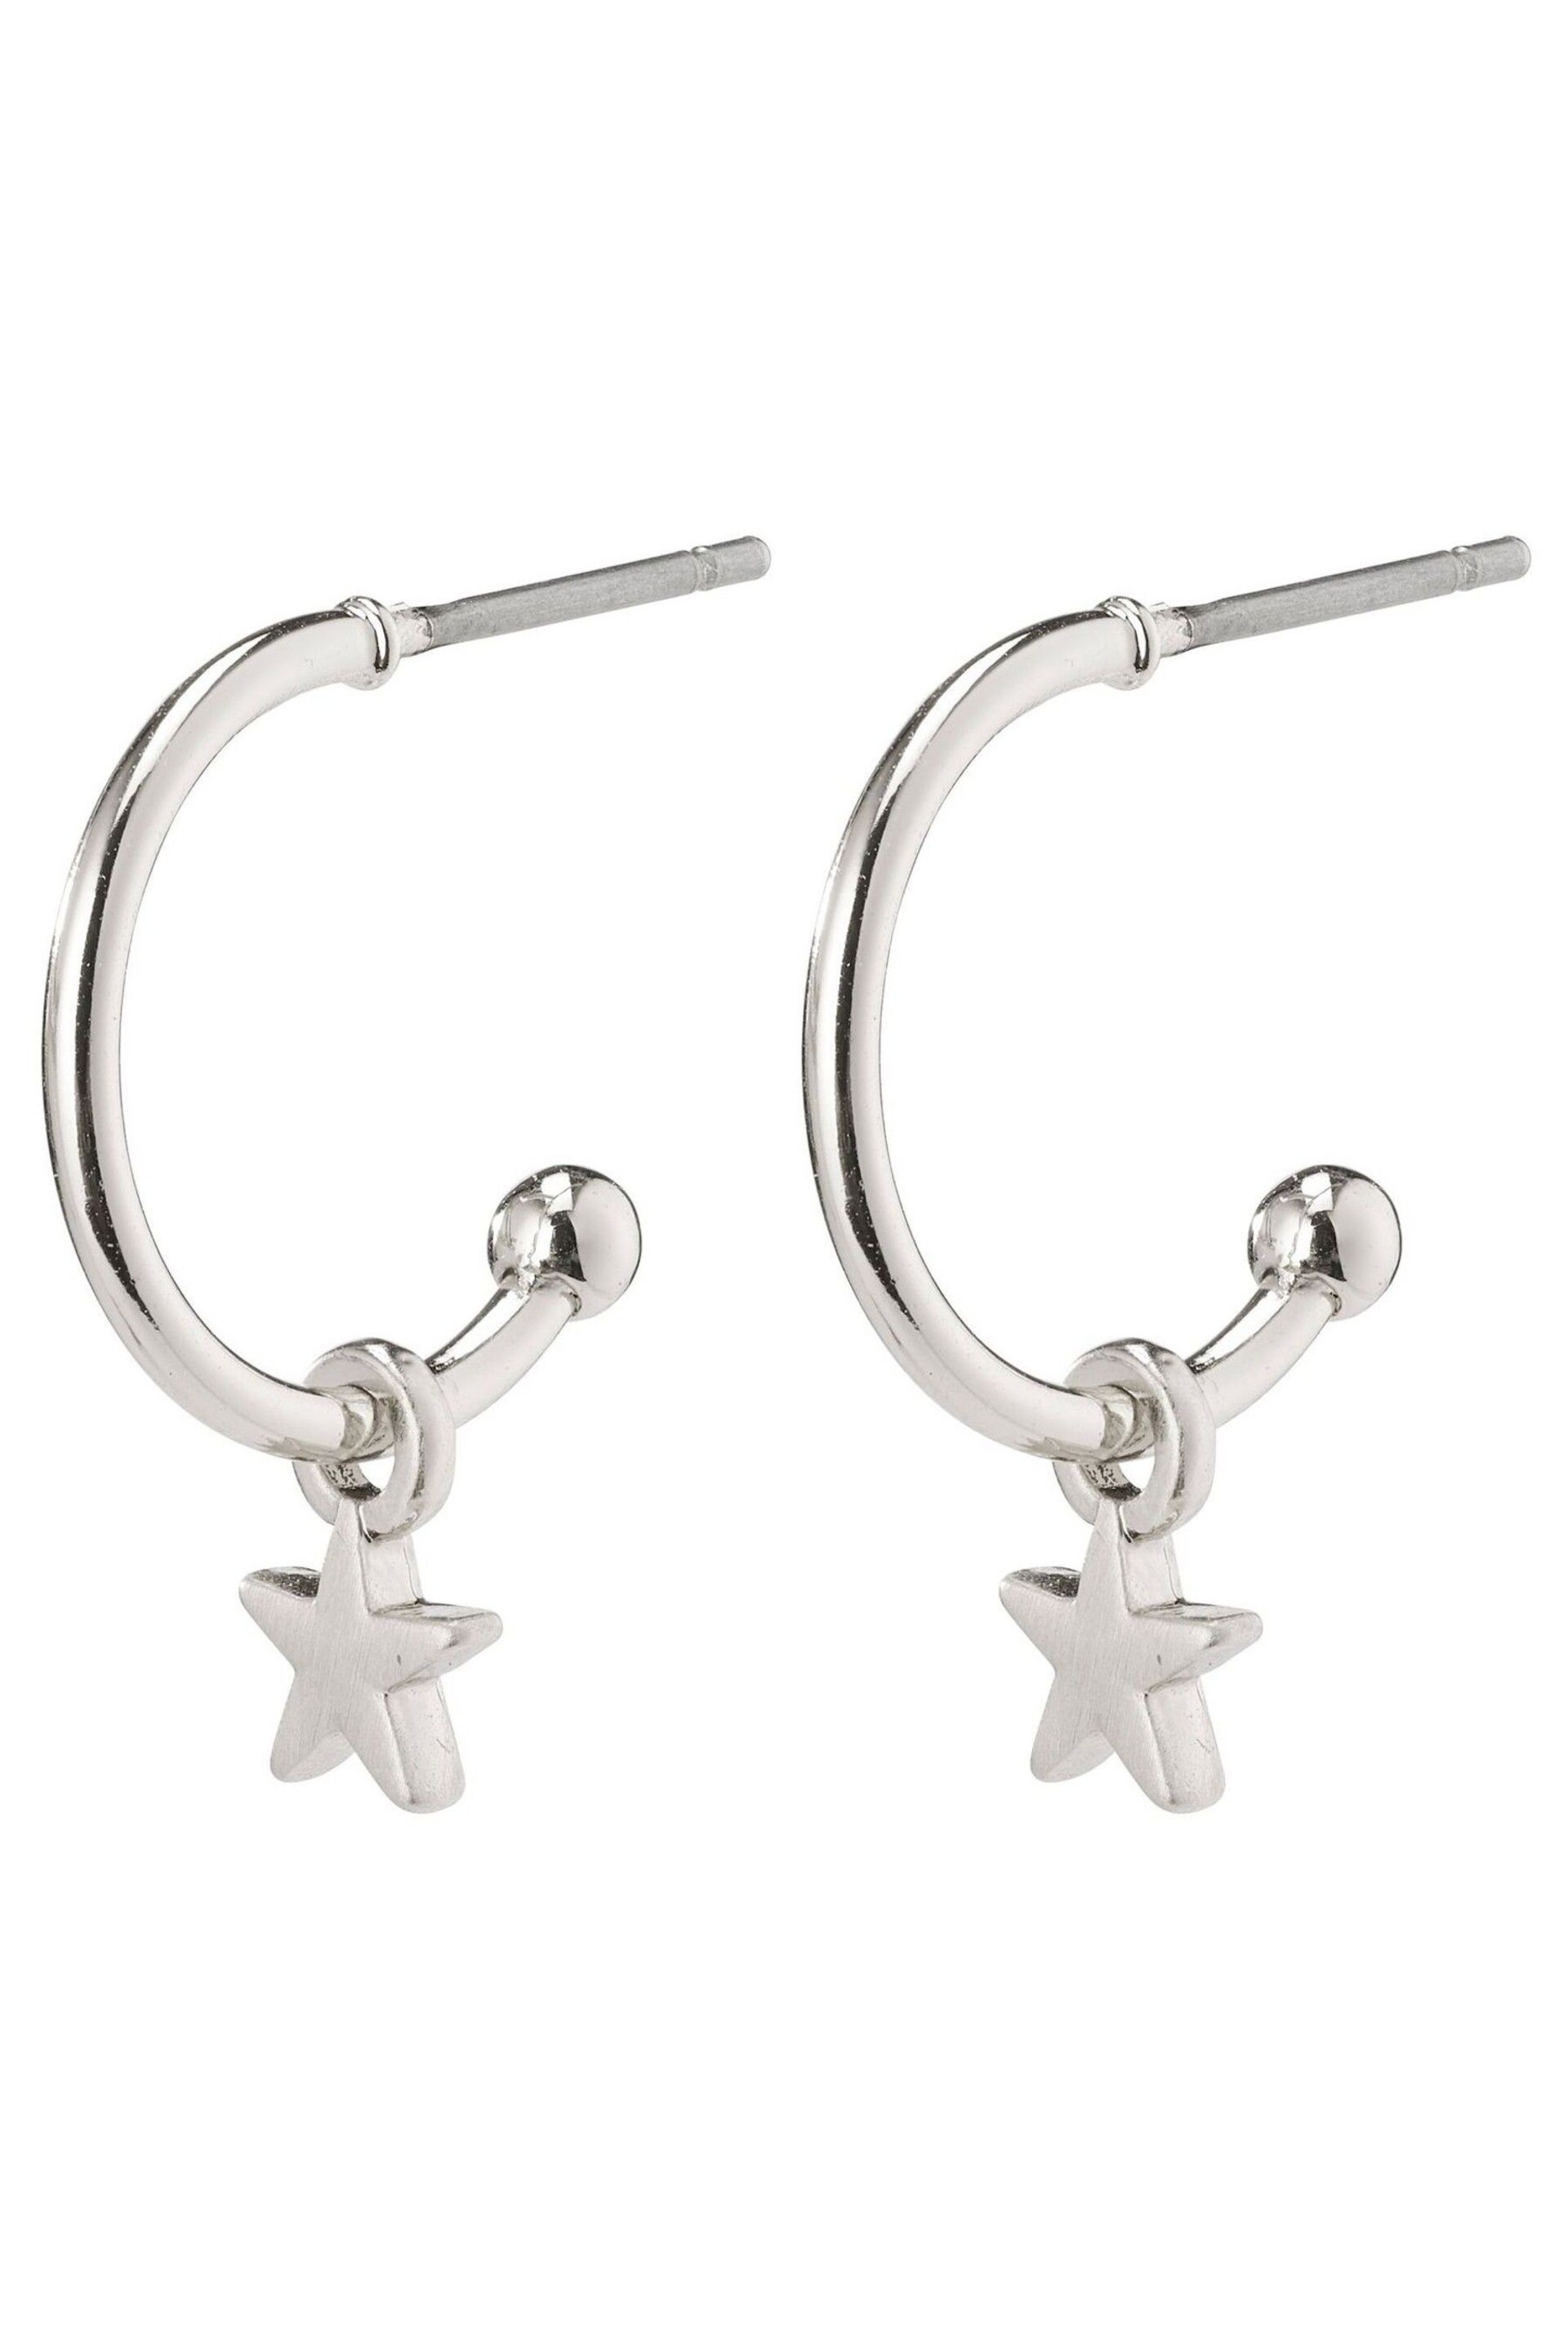 PILGRIM Silver Plated Ava Hoop Earrings with Star Drop - Image 2 of 4